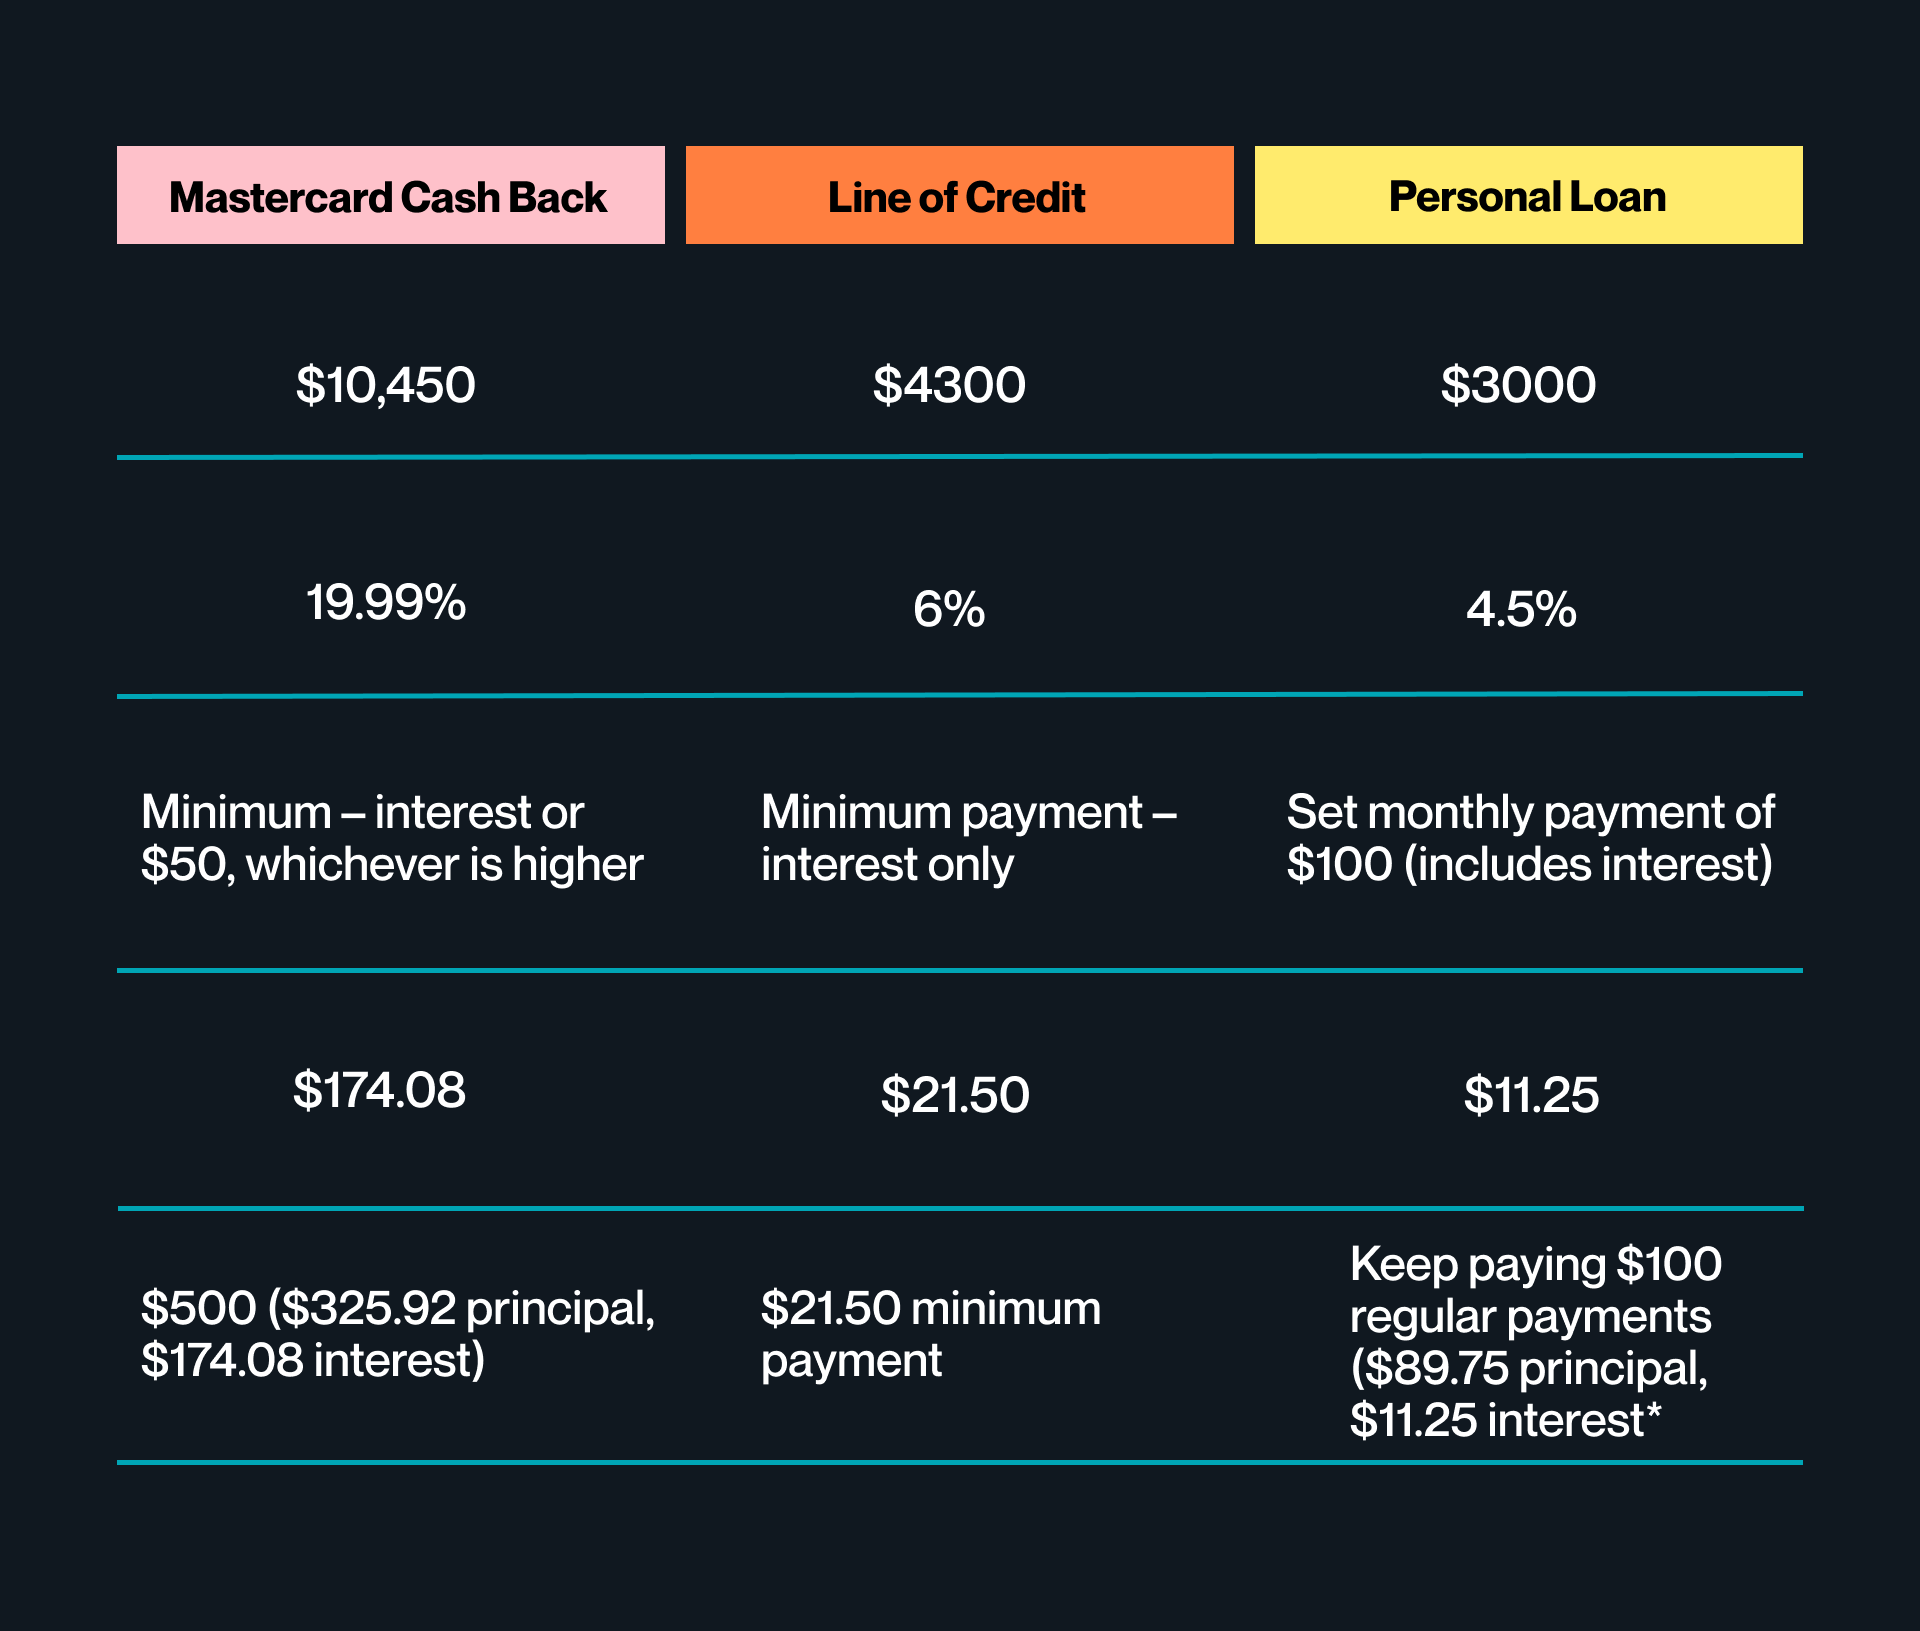 Debt repayment example for various debts